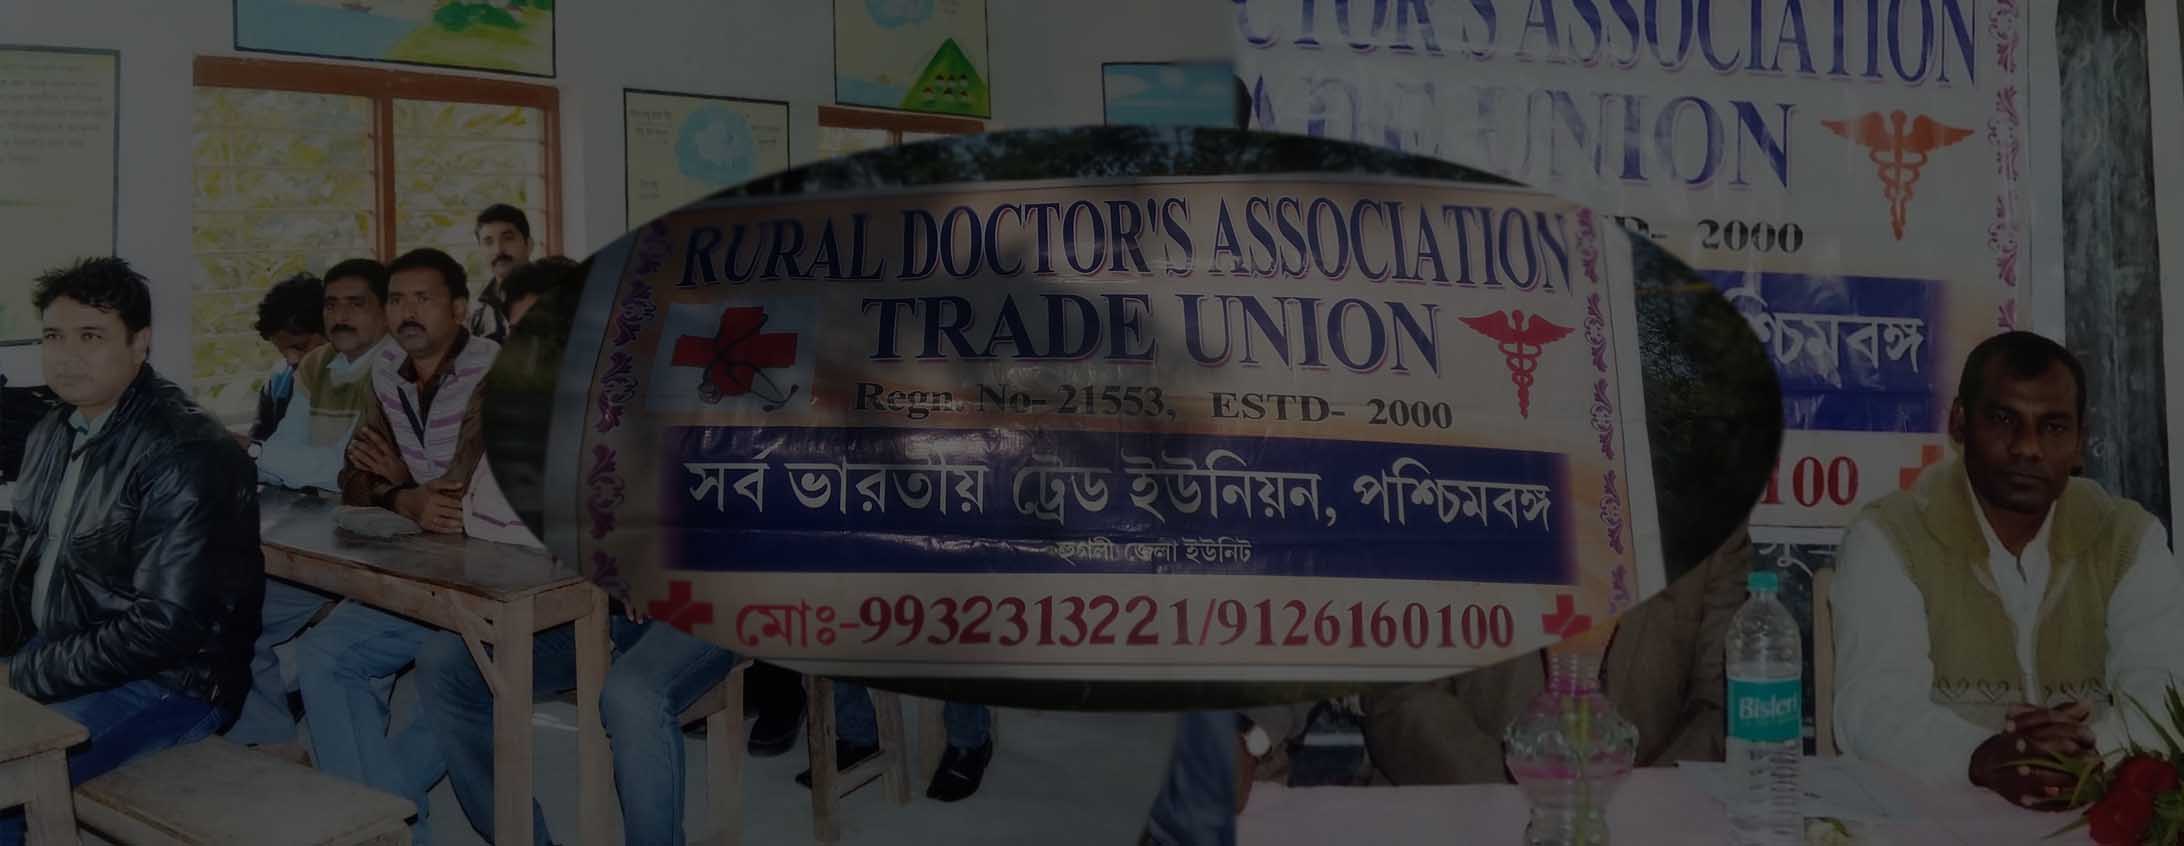 Rural Doctors Association of India